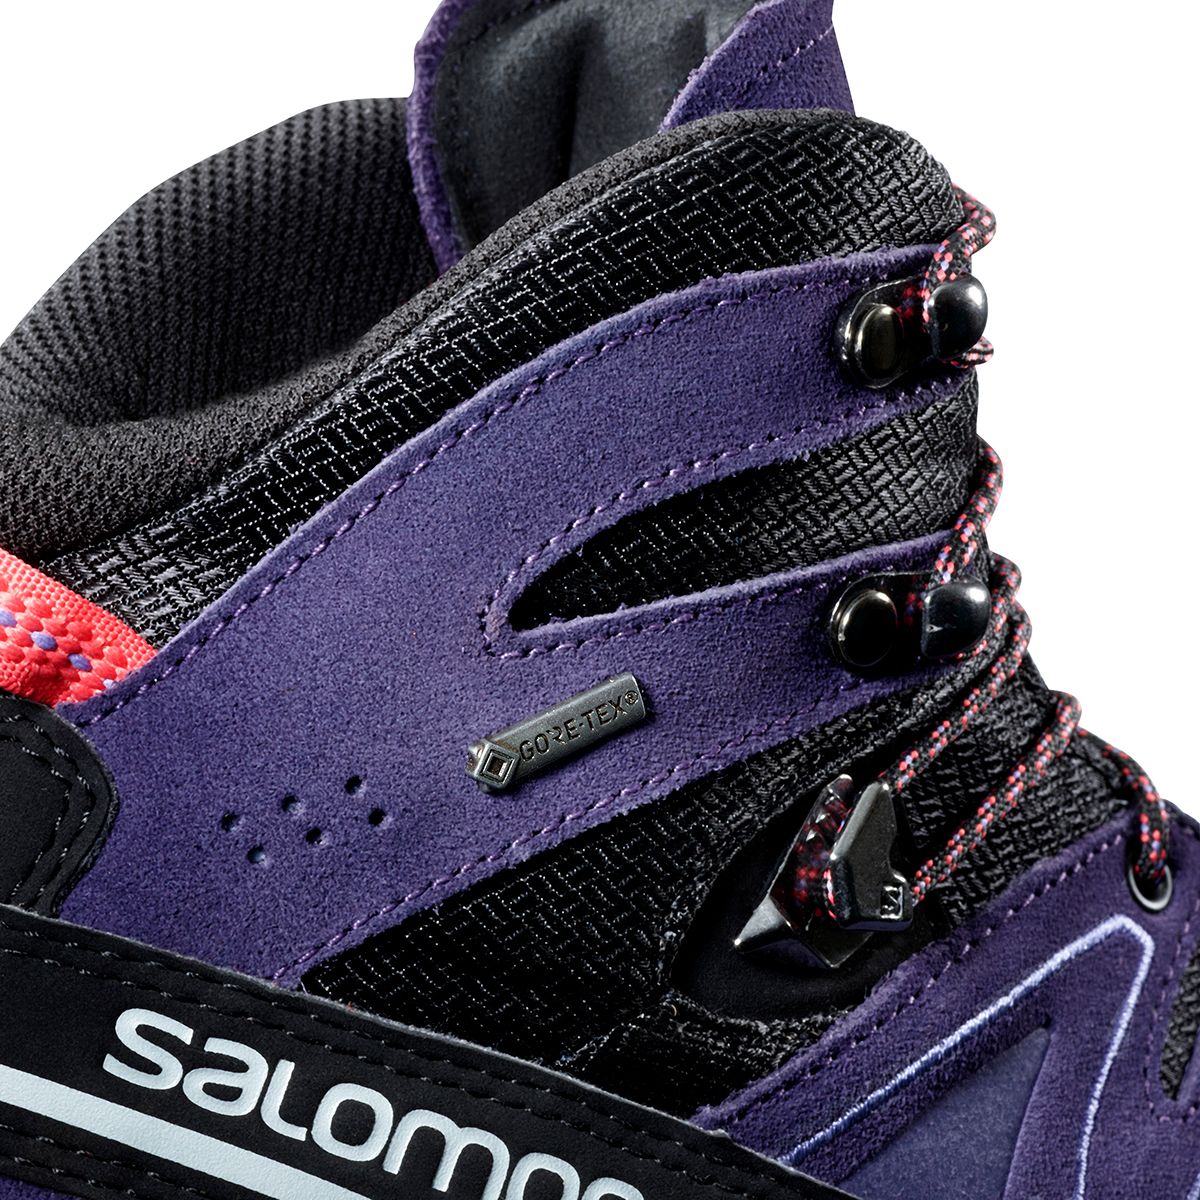 Salomon X Alp Mid LTR GTX Boot Women's - Footwear